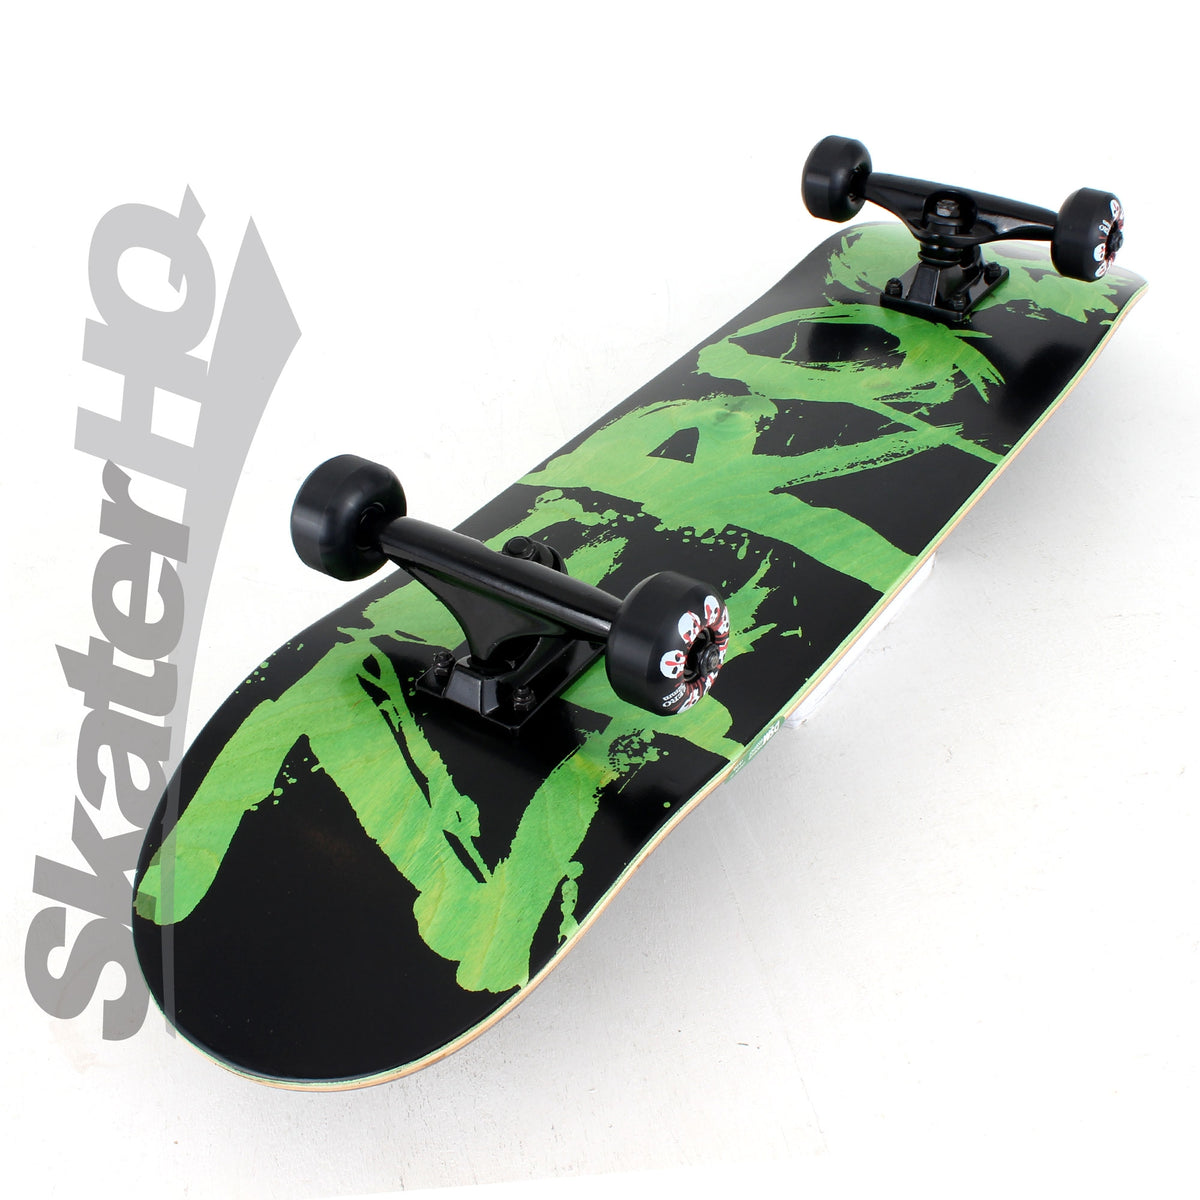 Zero Blood Knockout Complete 8.125 - Green Skateboard Completes Modern Street